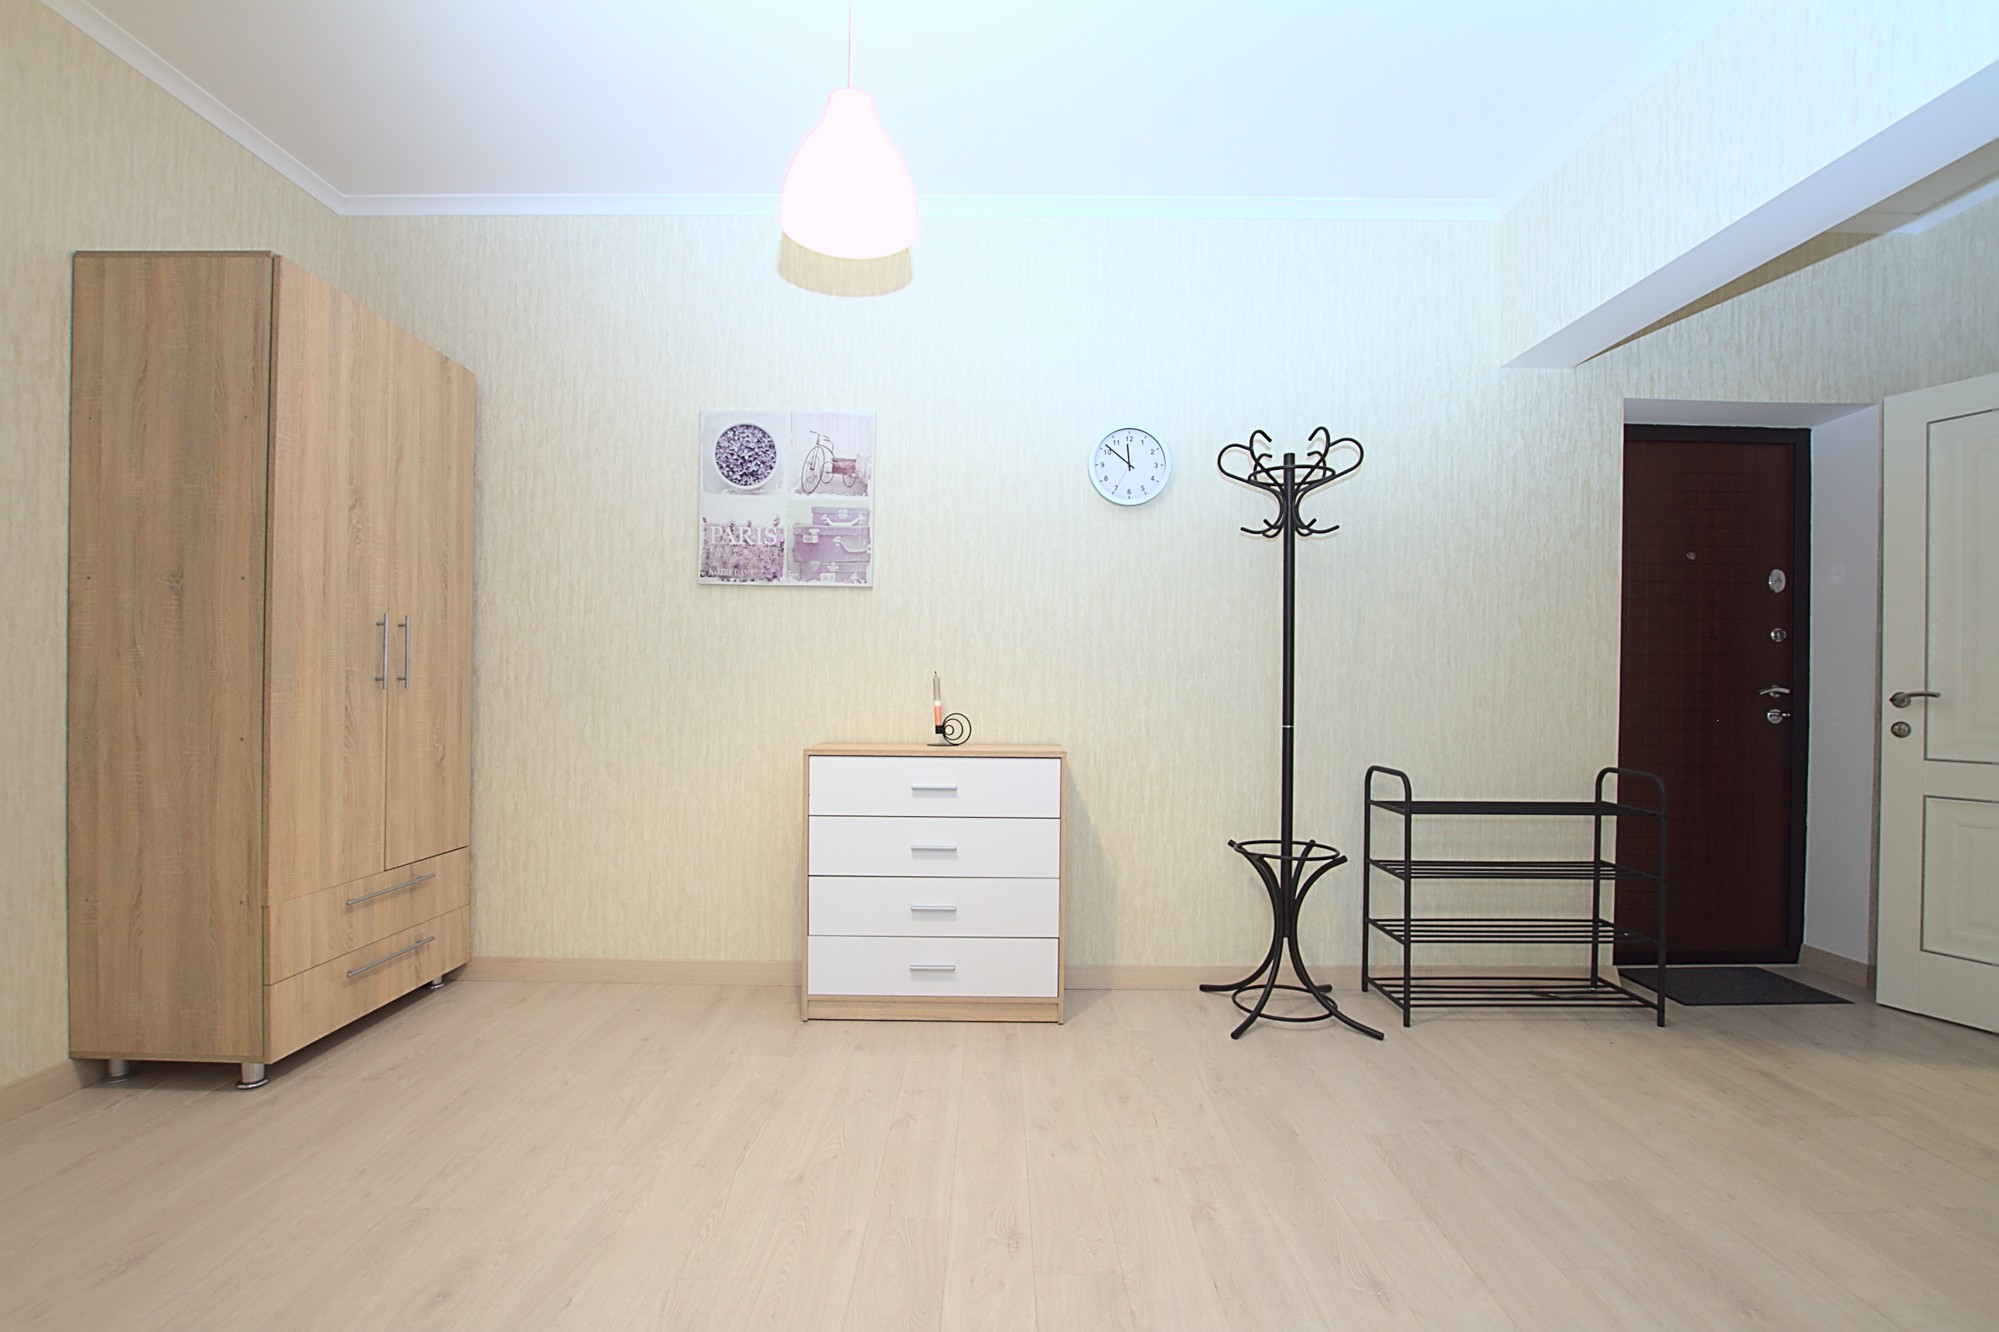 Elegance Trio este un apartament de 3 camere de inchiriat in Chisinau, Moldova